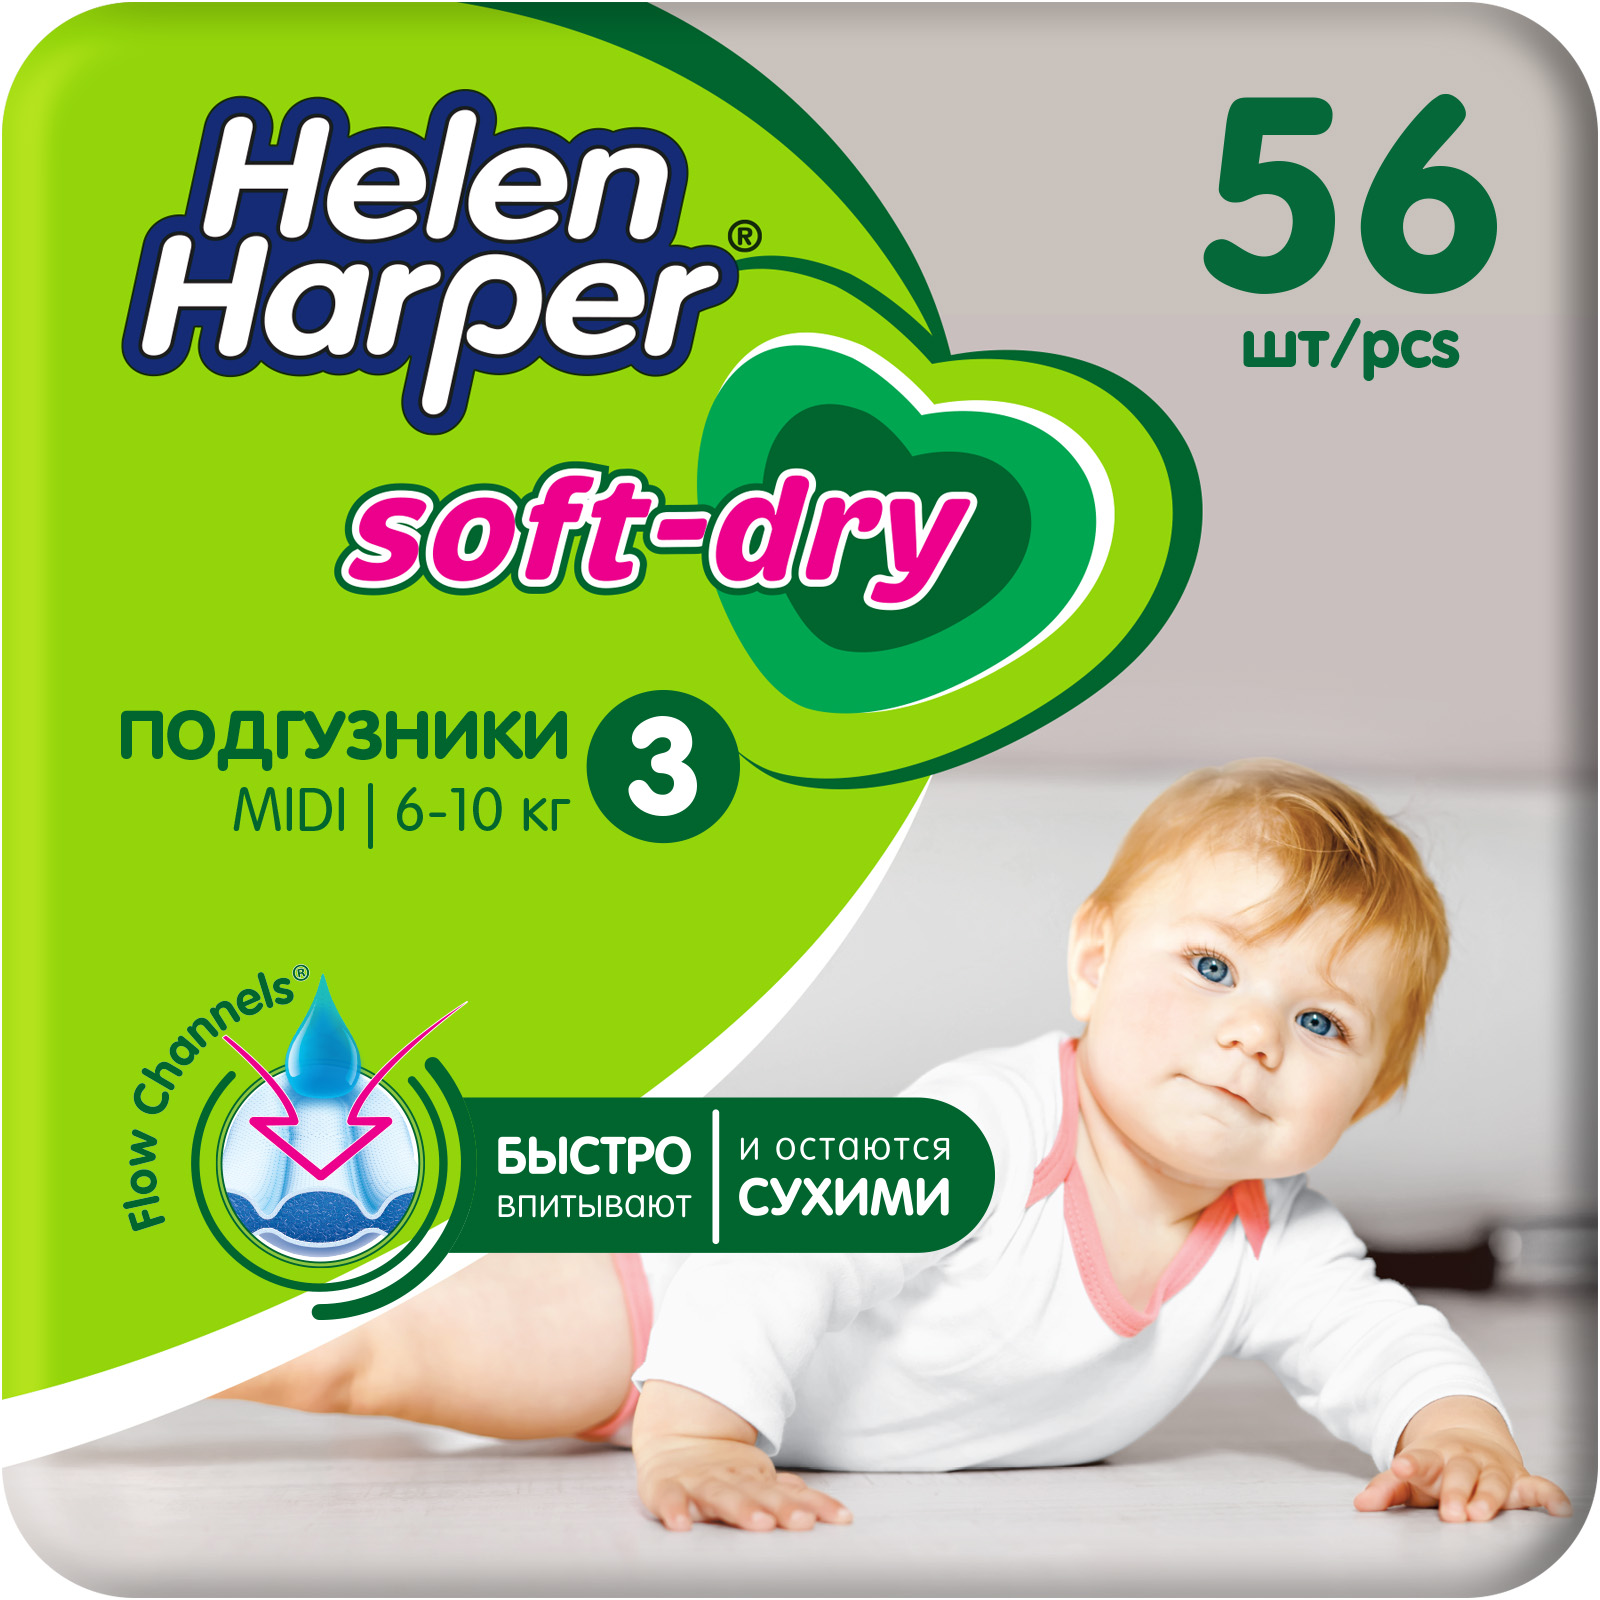 Подгузники детские Helen Harper Soft and Dry размер 3/Midi 6-10 кг 56 шт. - фото 1